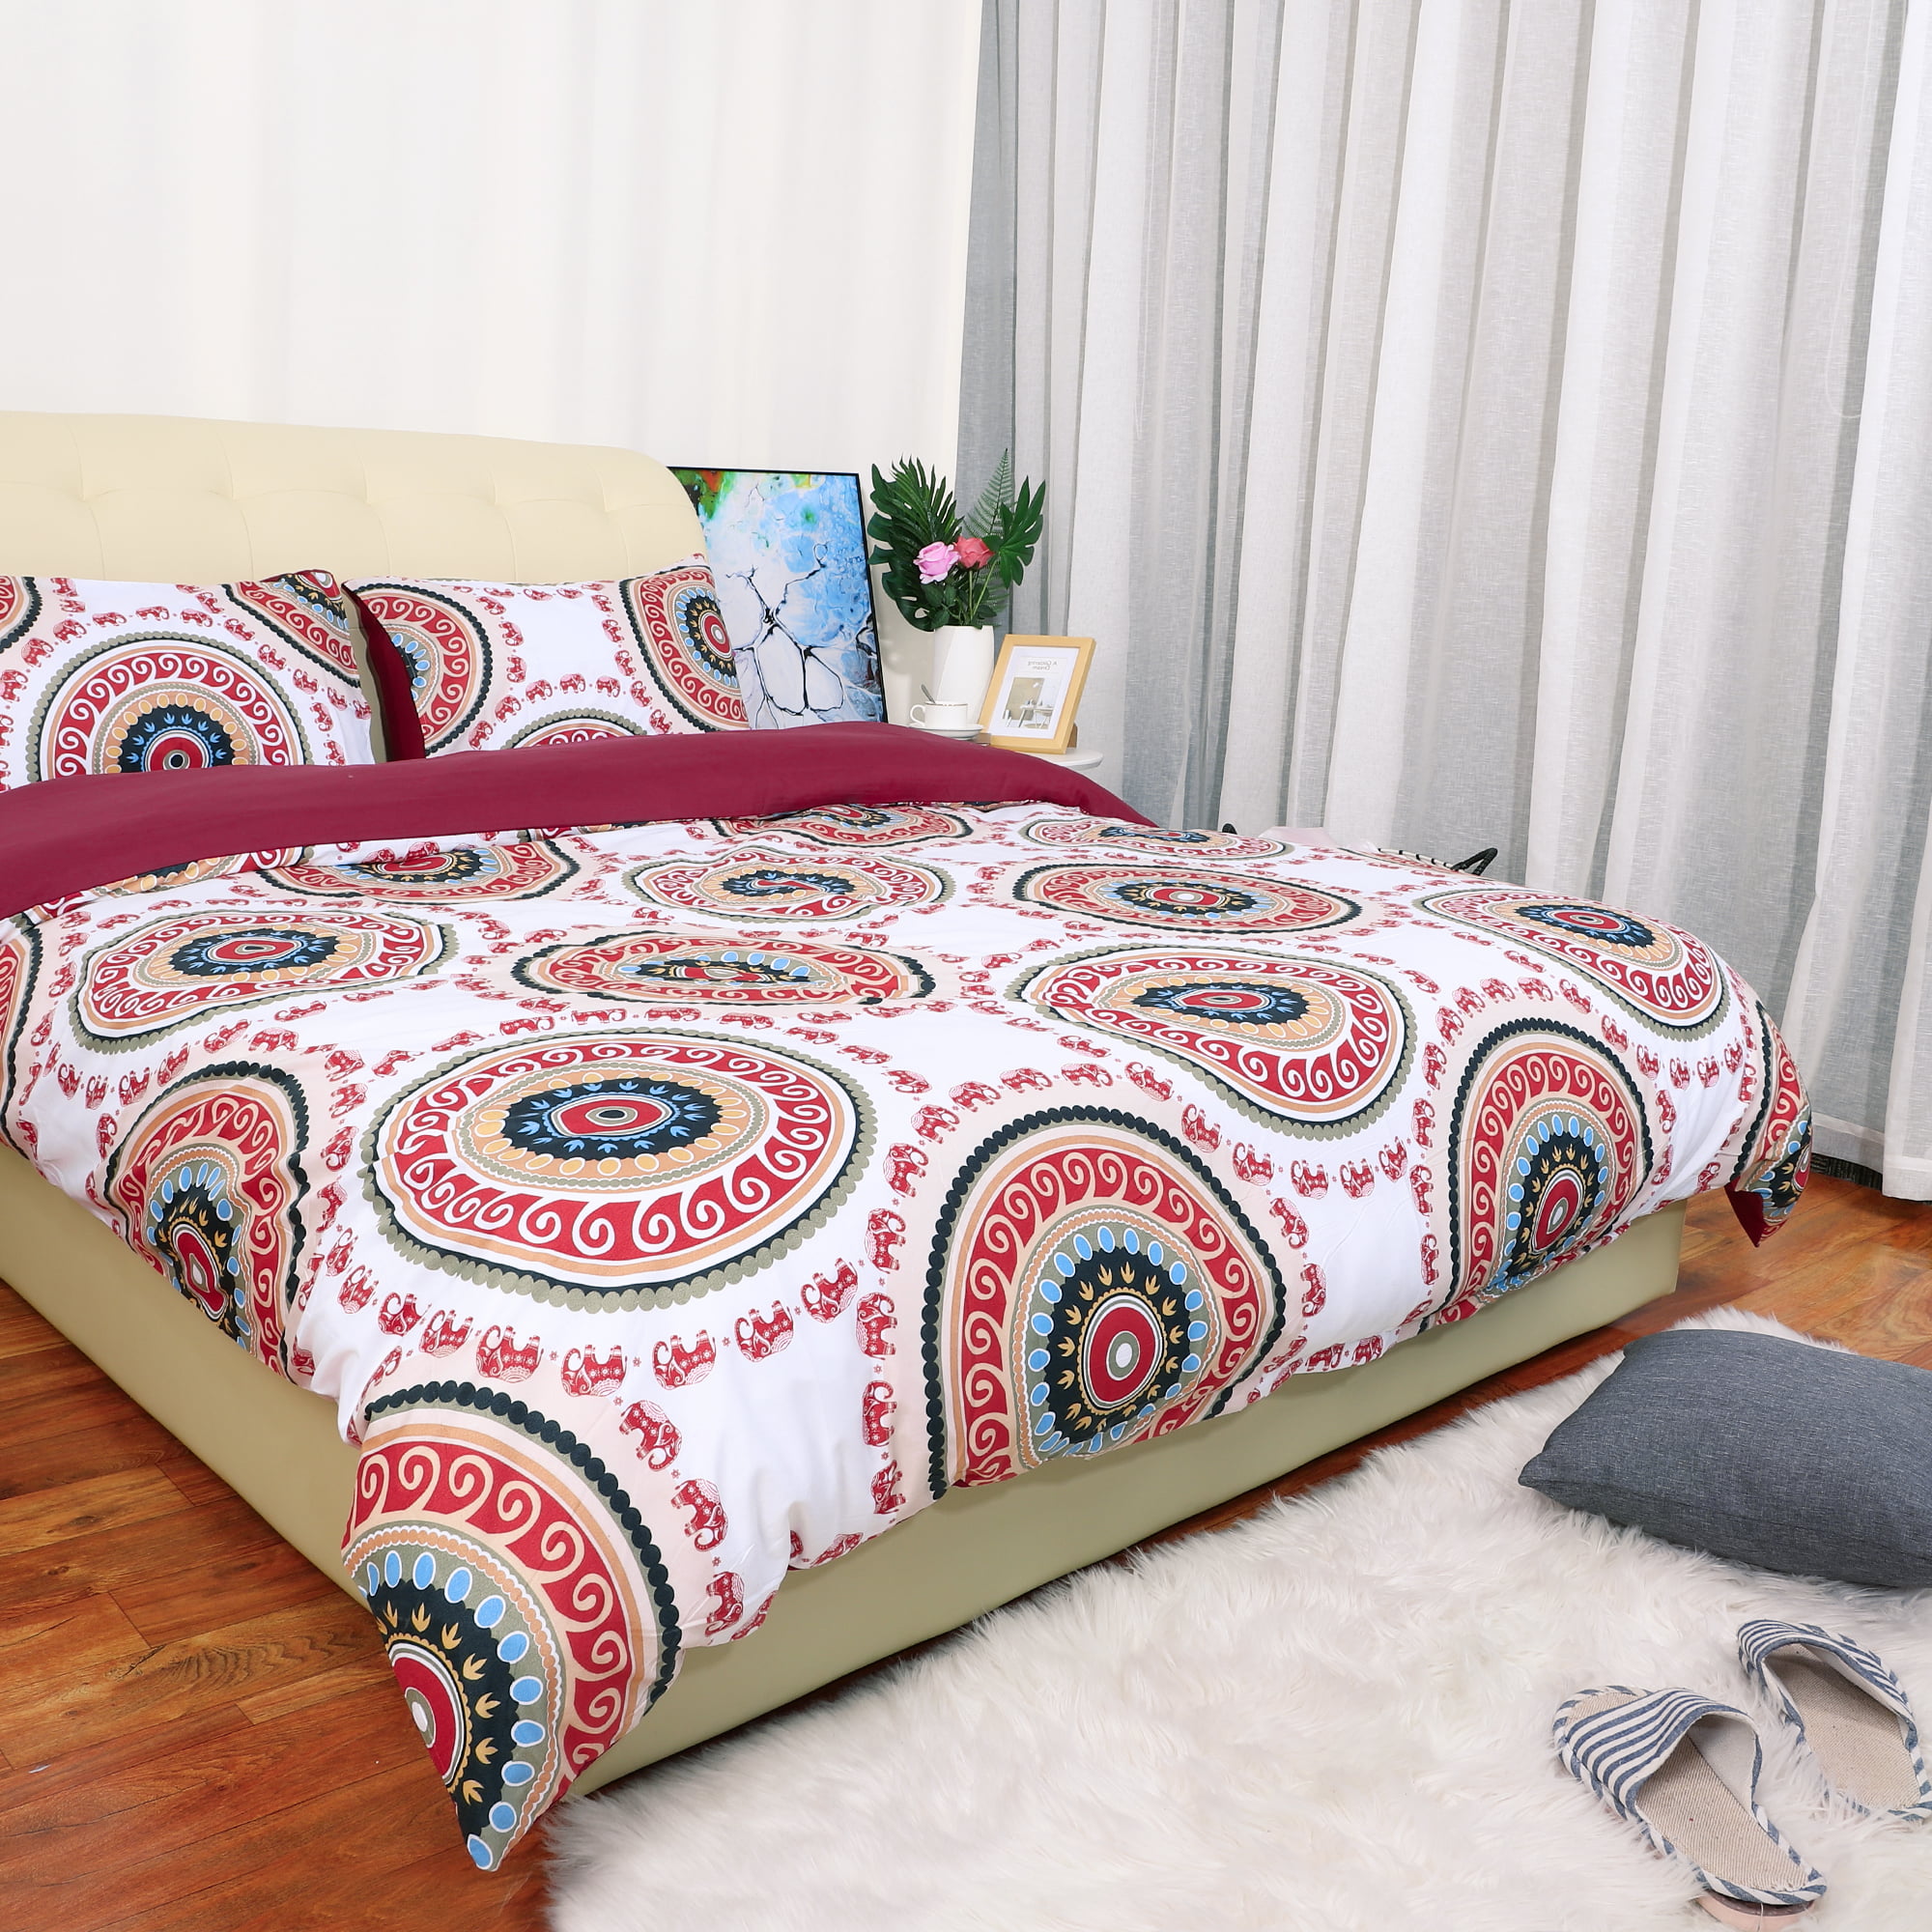 Details about   100% Cotton Mandala Bed Sheet Set Double/Queen Size Bedspread Pillow Covers Set 